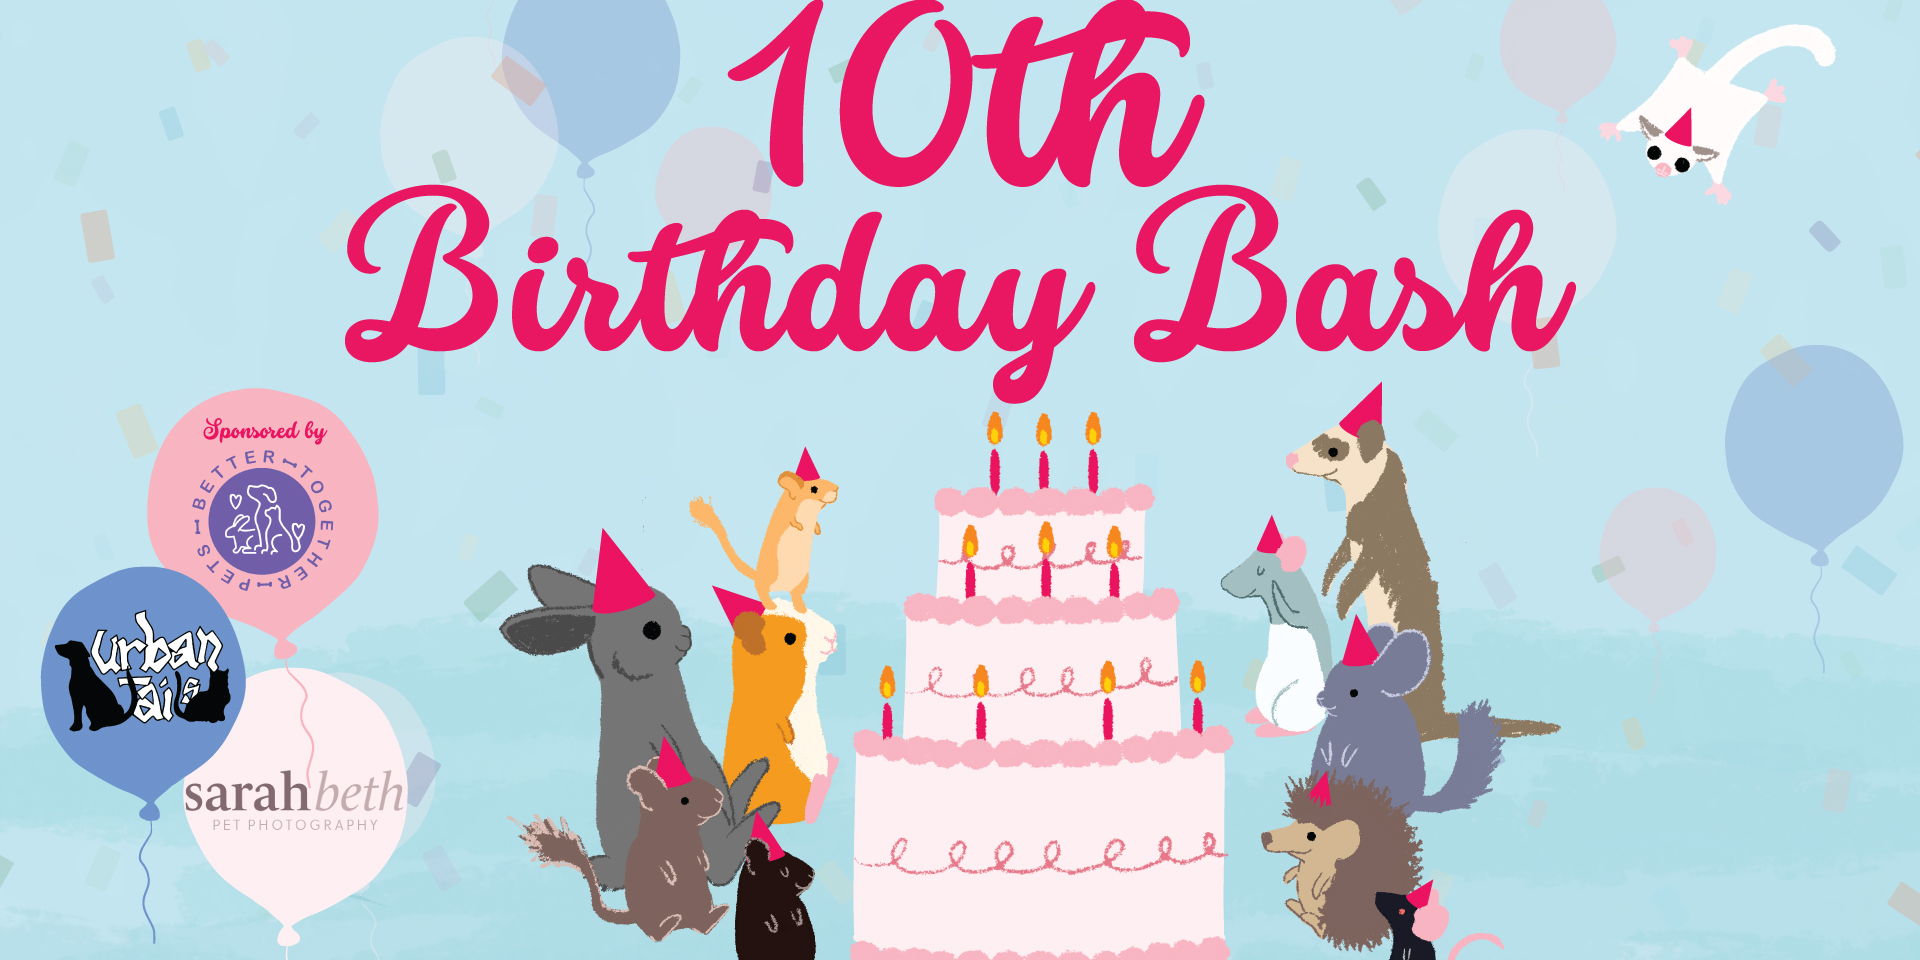 MNPPR's 10th Birthday Bash promotional image